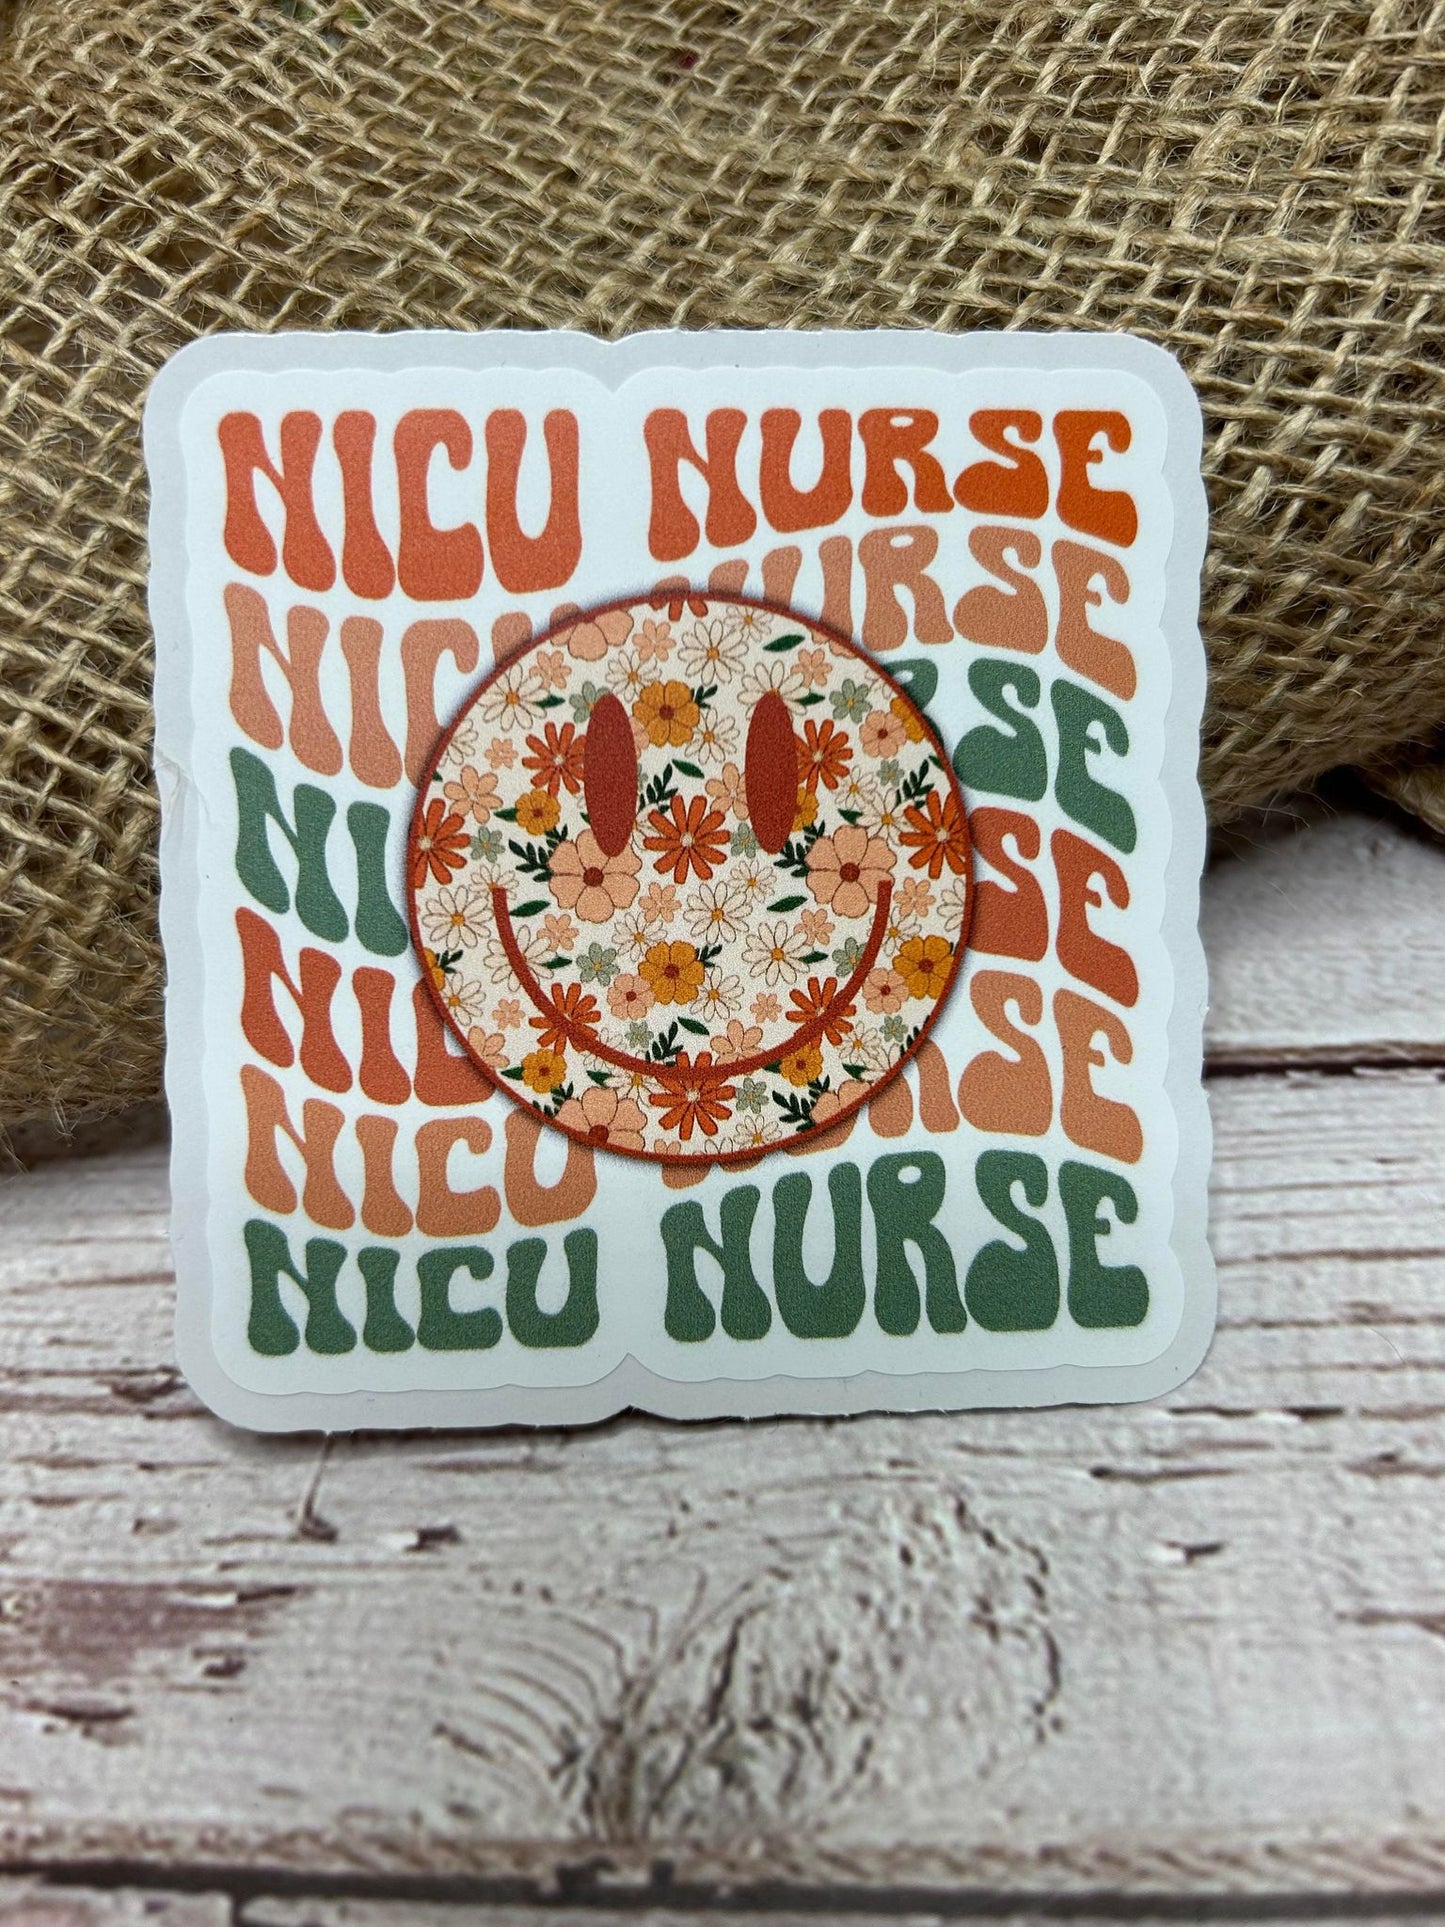 P20 Nicu Nurse DC